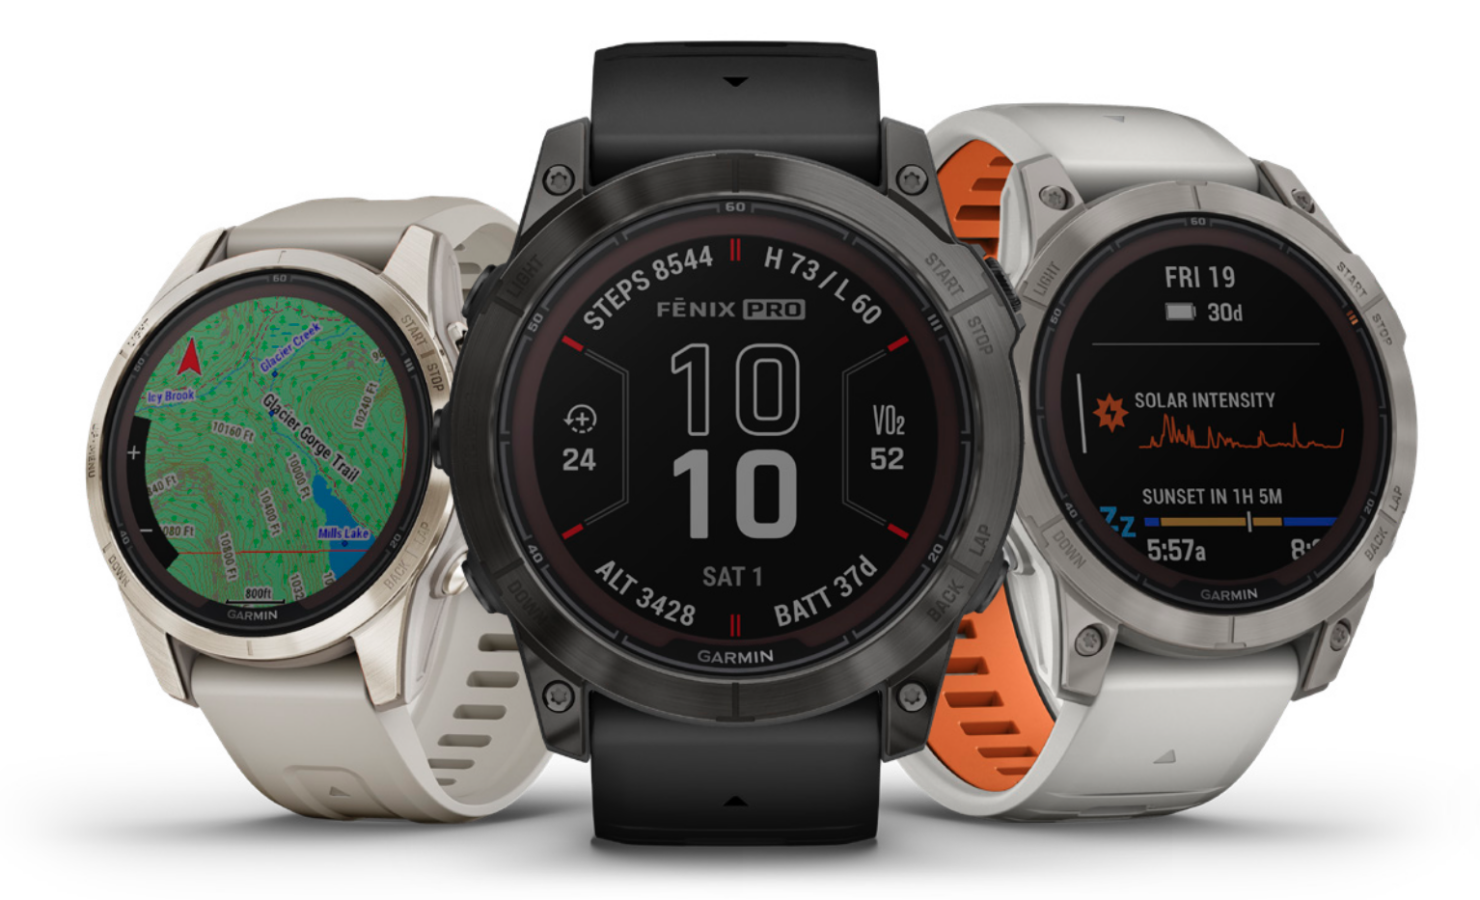 picture of 3 fenix 7 Pro Garmin smartwatches